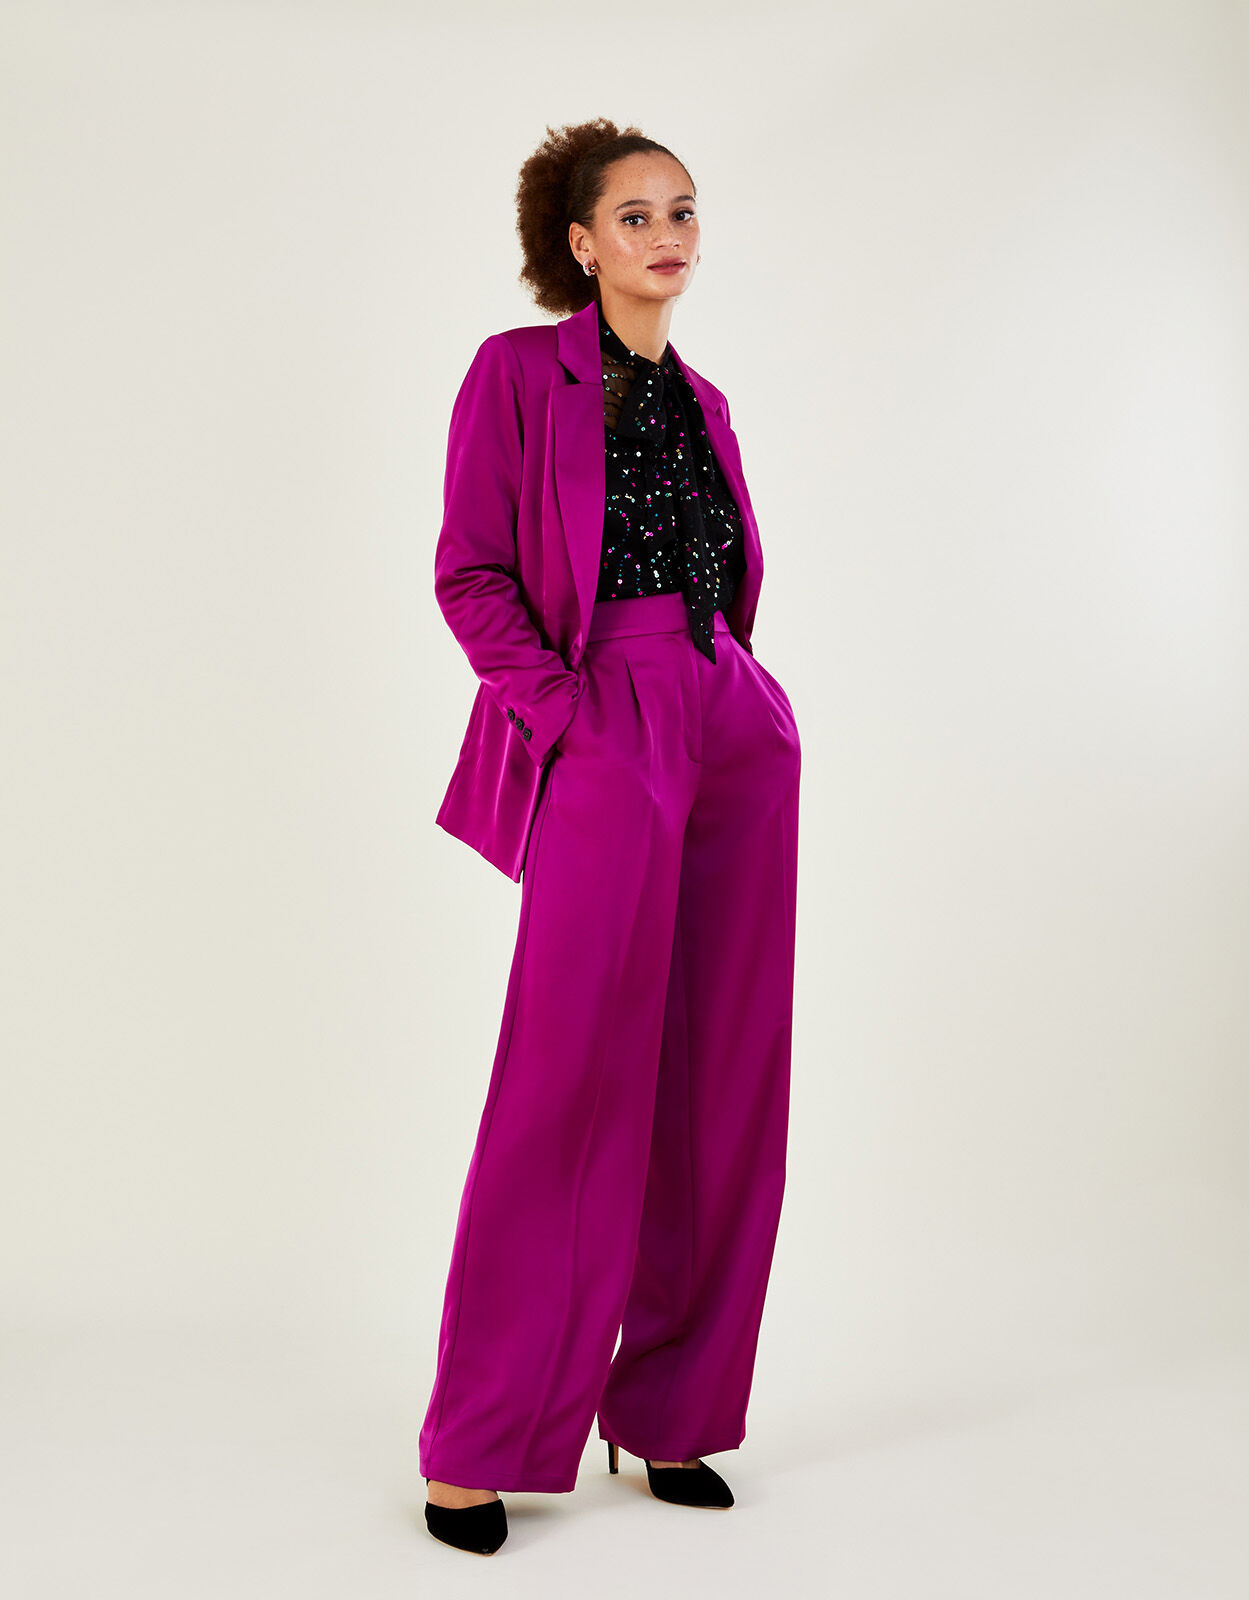 Sophia pyjamas - Set of trousers and top in purple silk Prune - Marjolaine